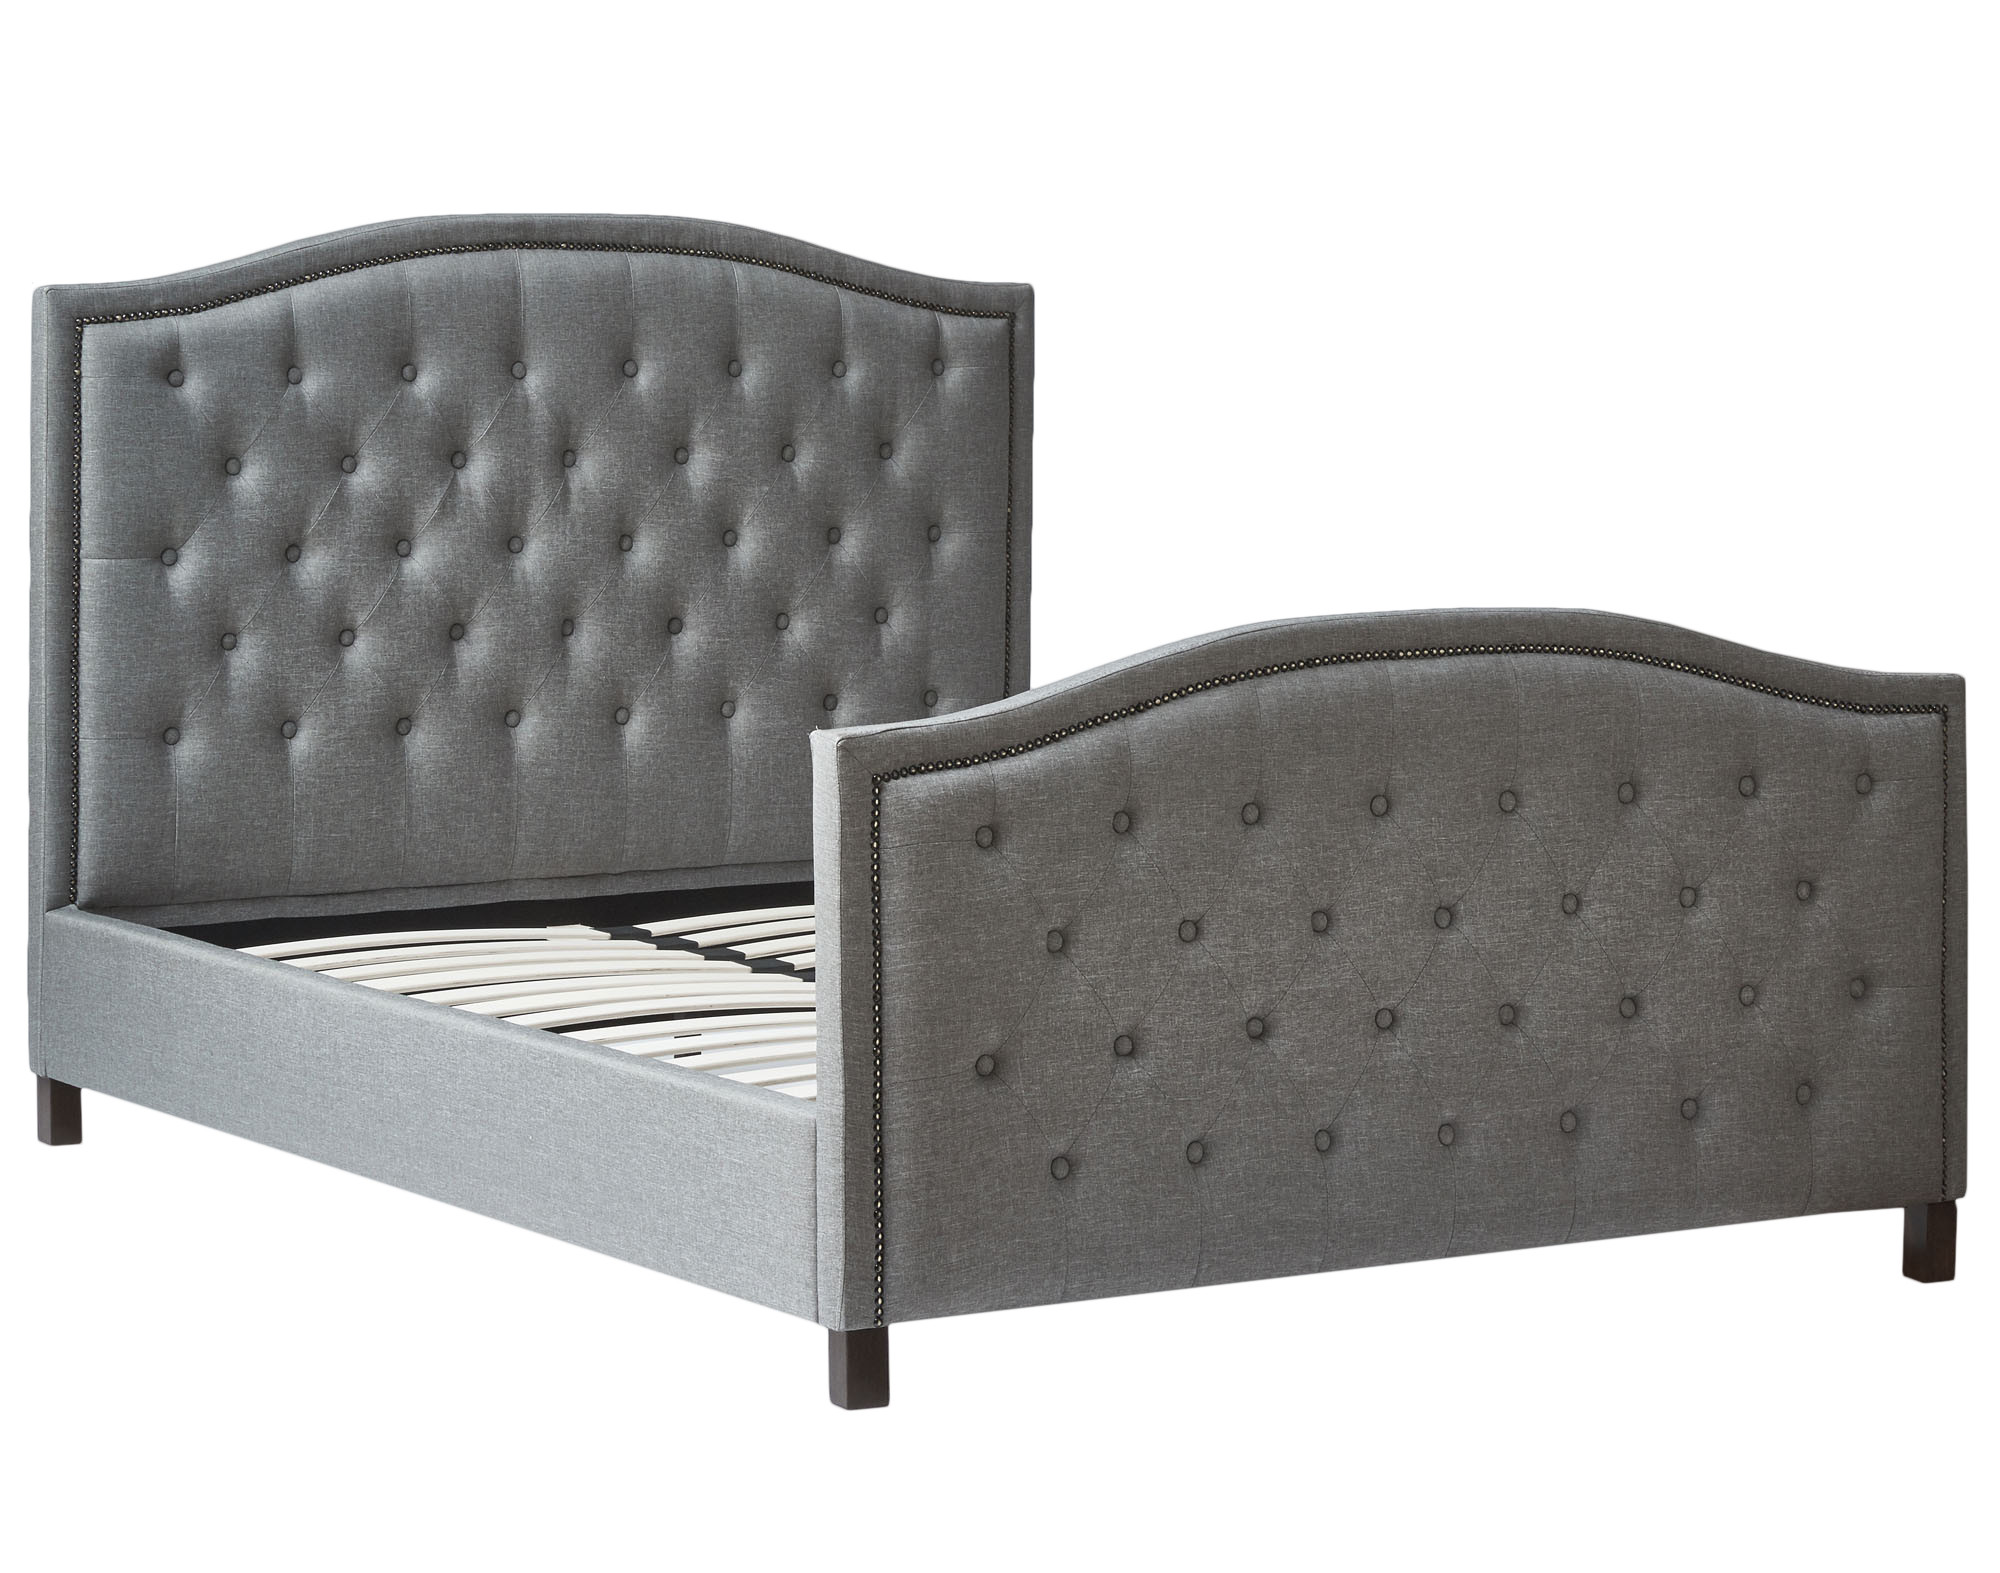 NEW Light Grey Luxury Queen Bed Frame | eBay